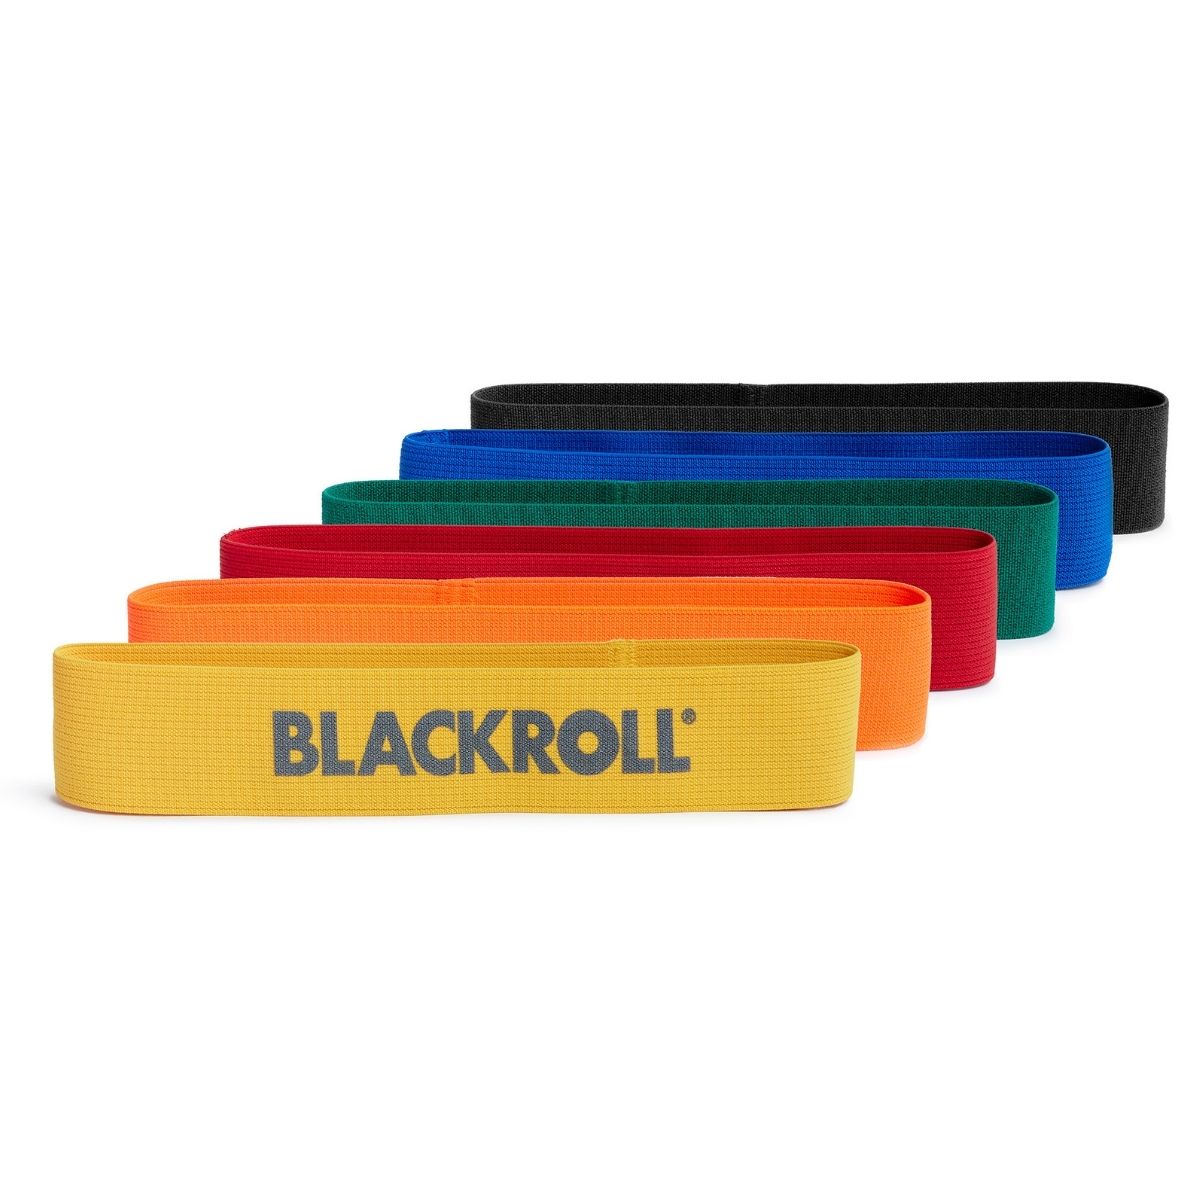 Blackroll Loop Band Set da 6 fasce fitness